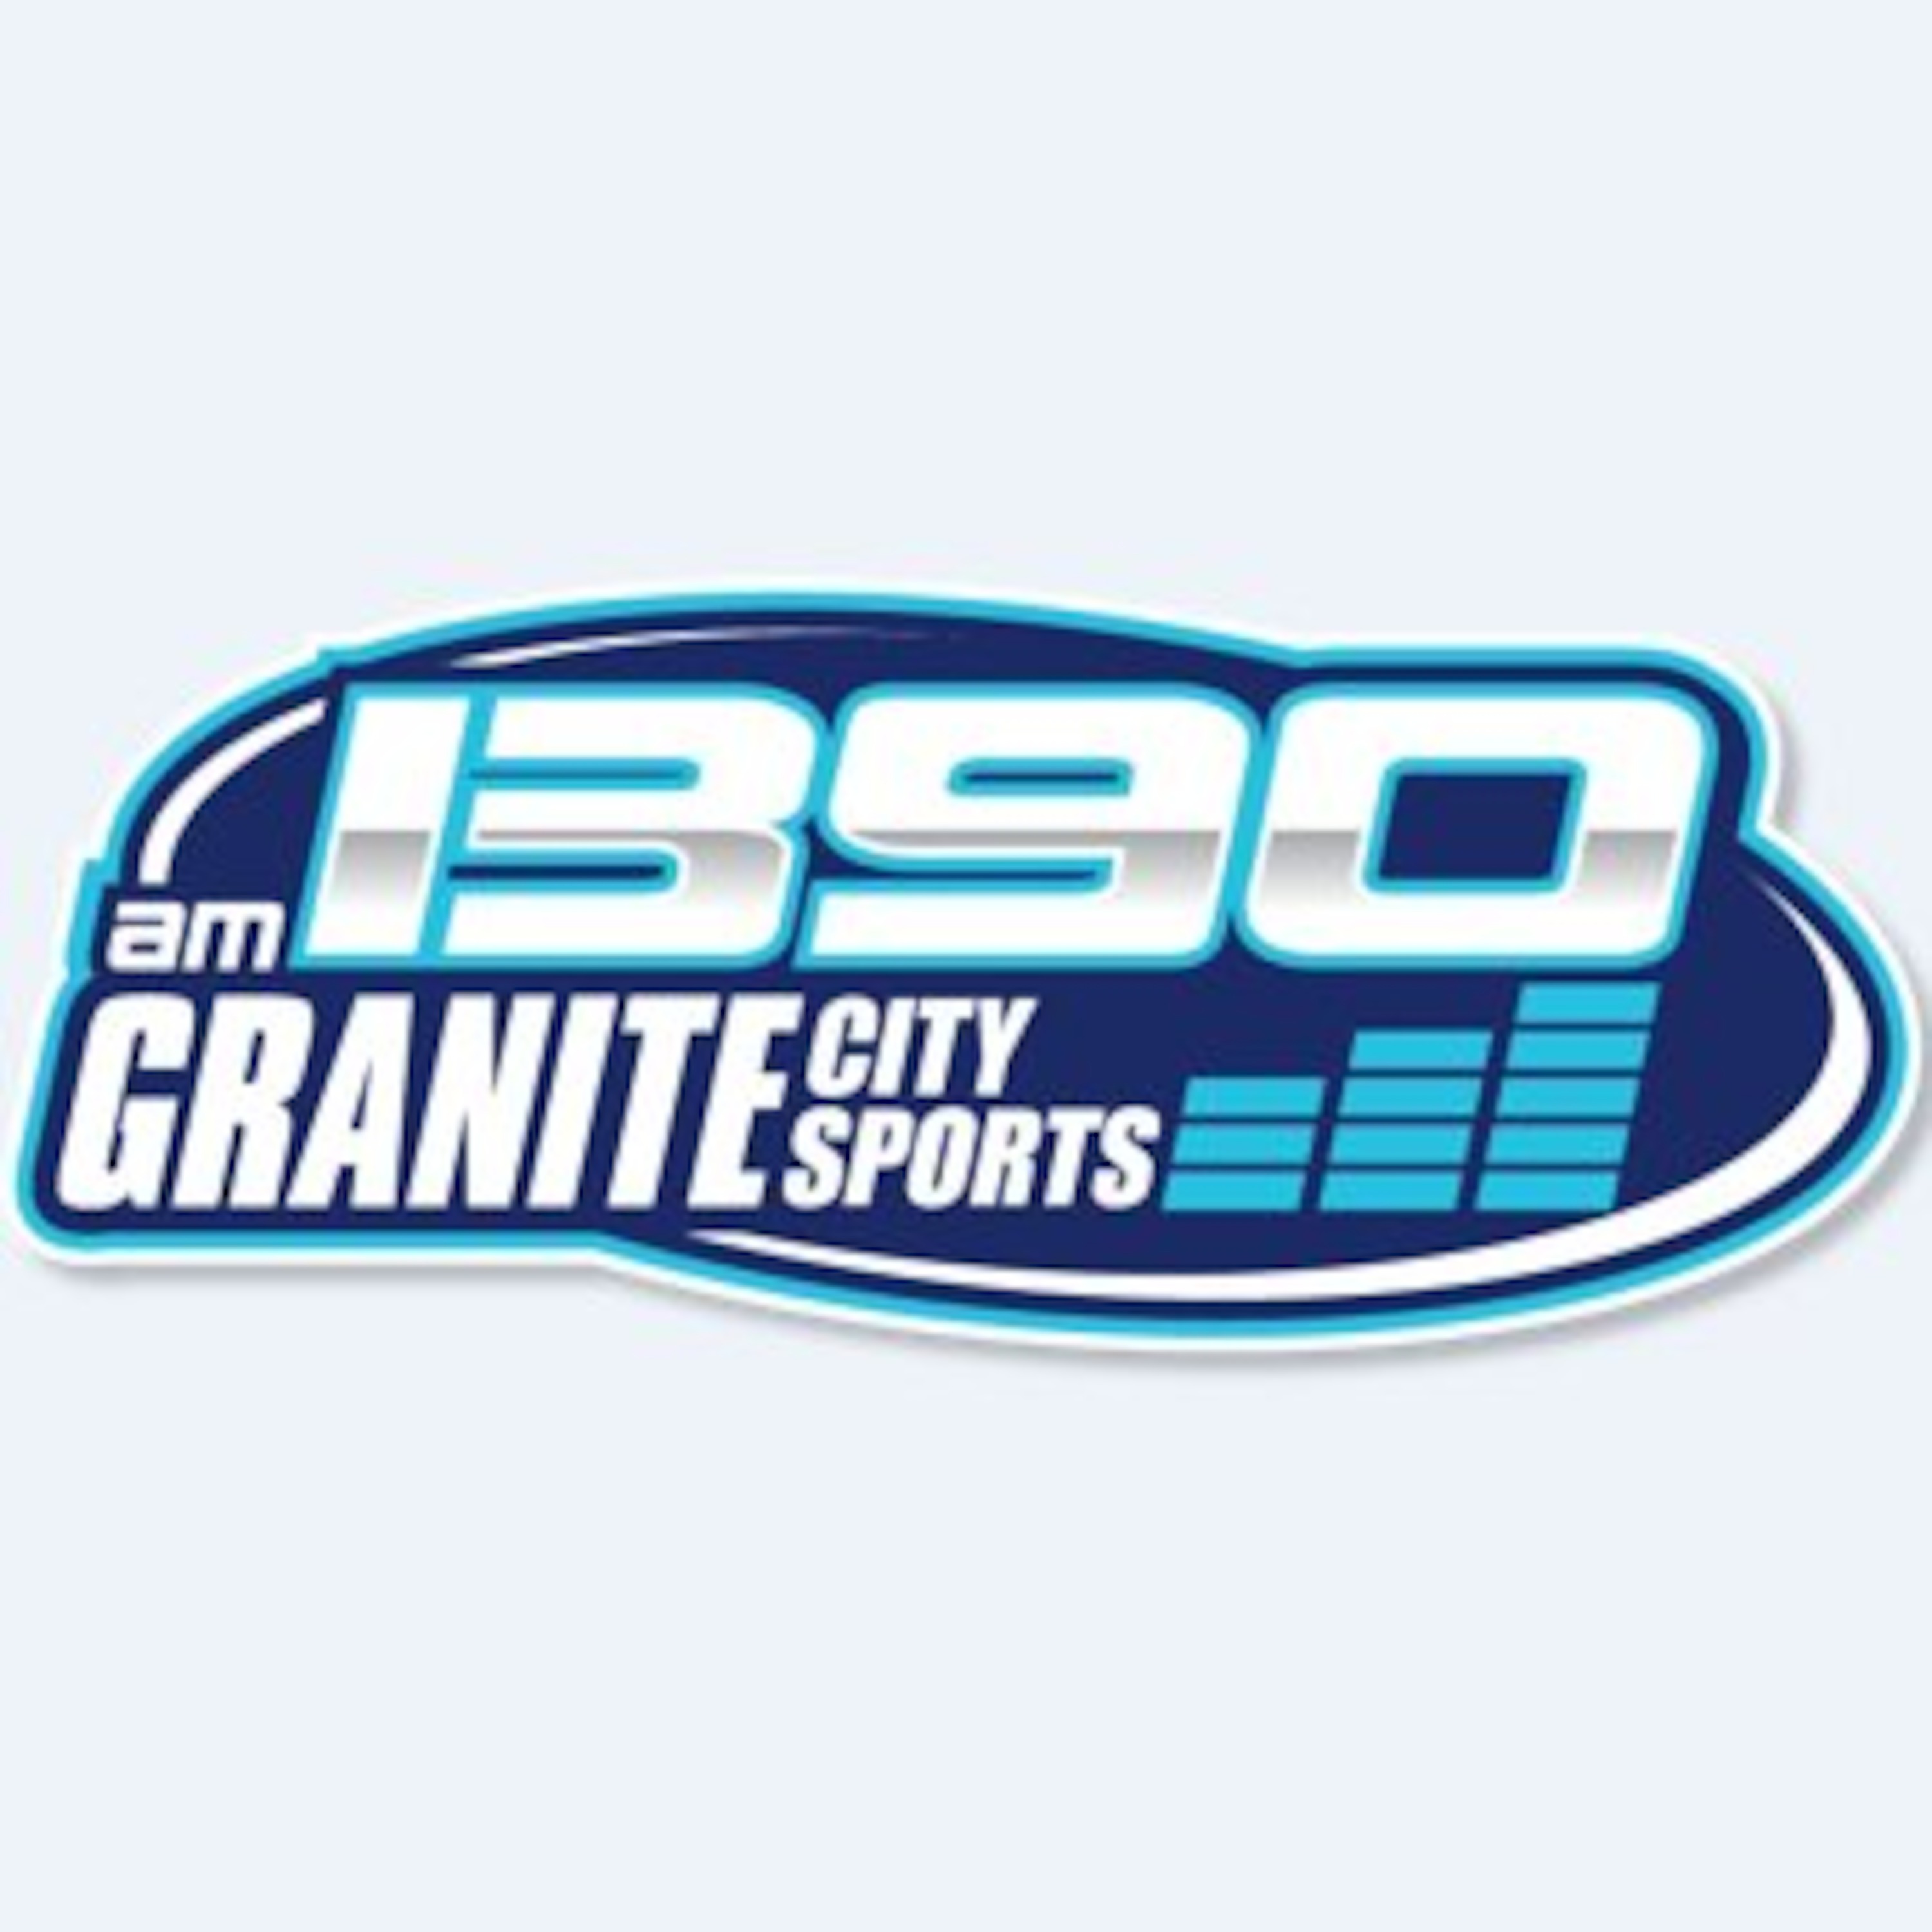 Granite City Sports